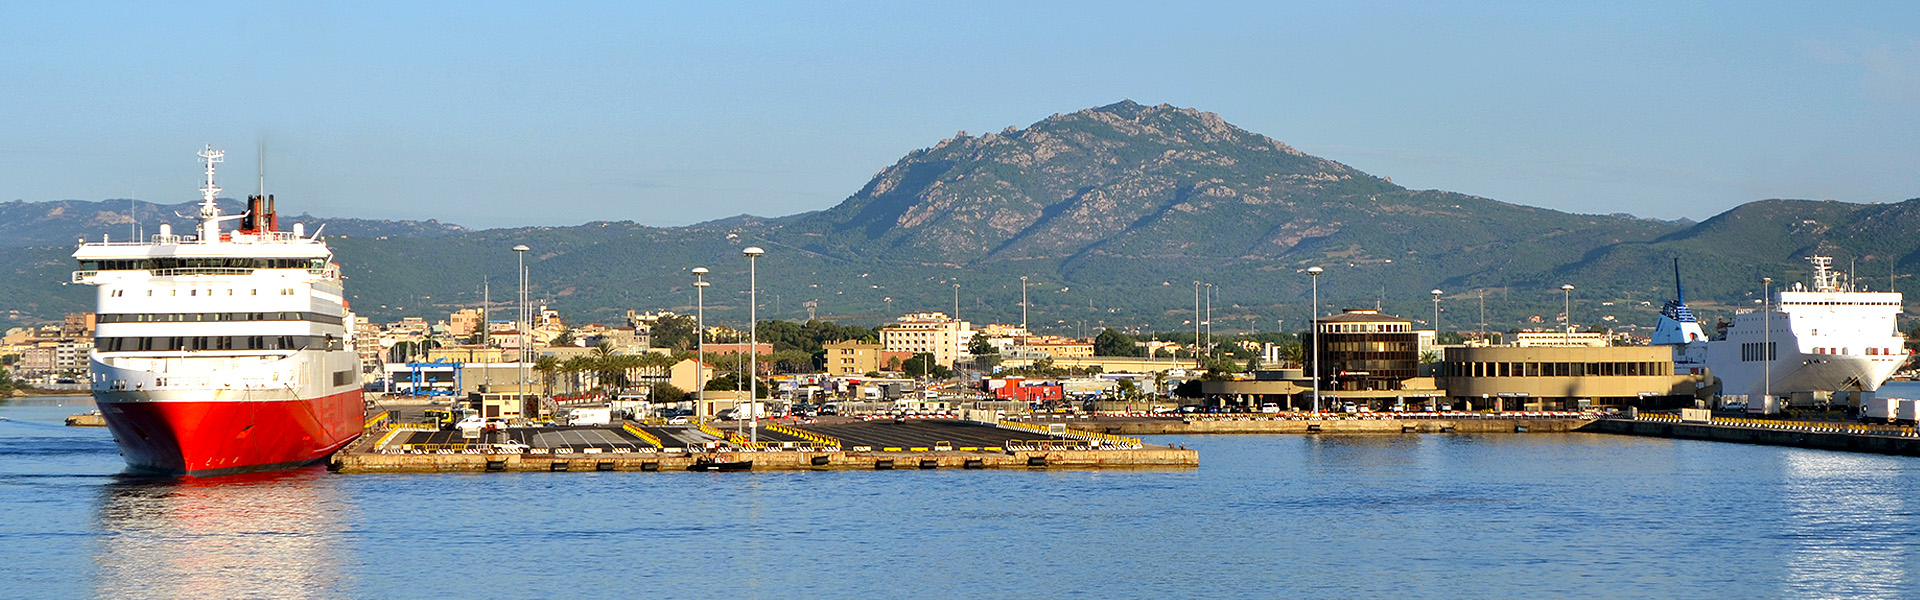 Port of Olbia